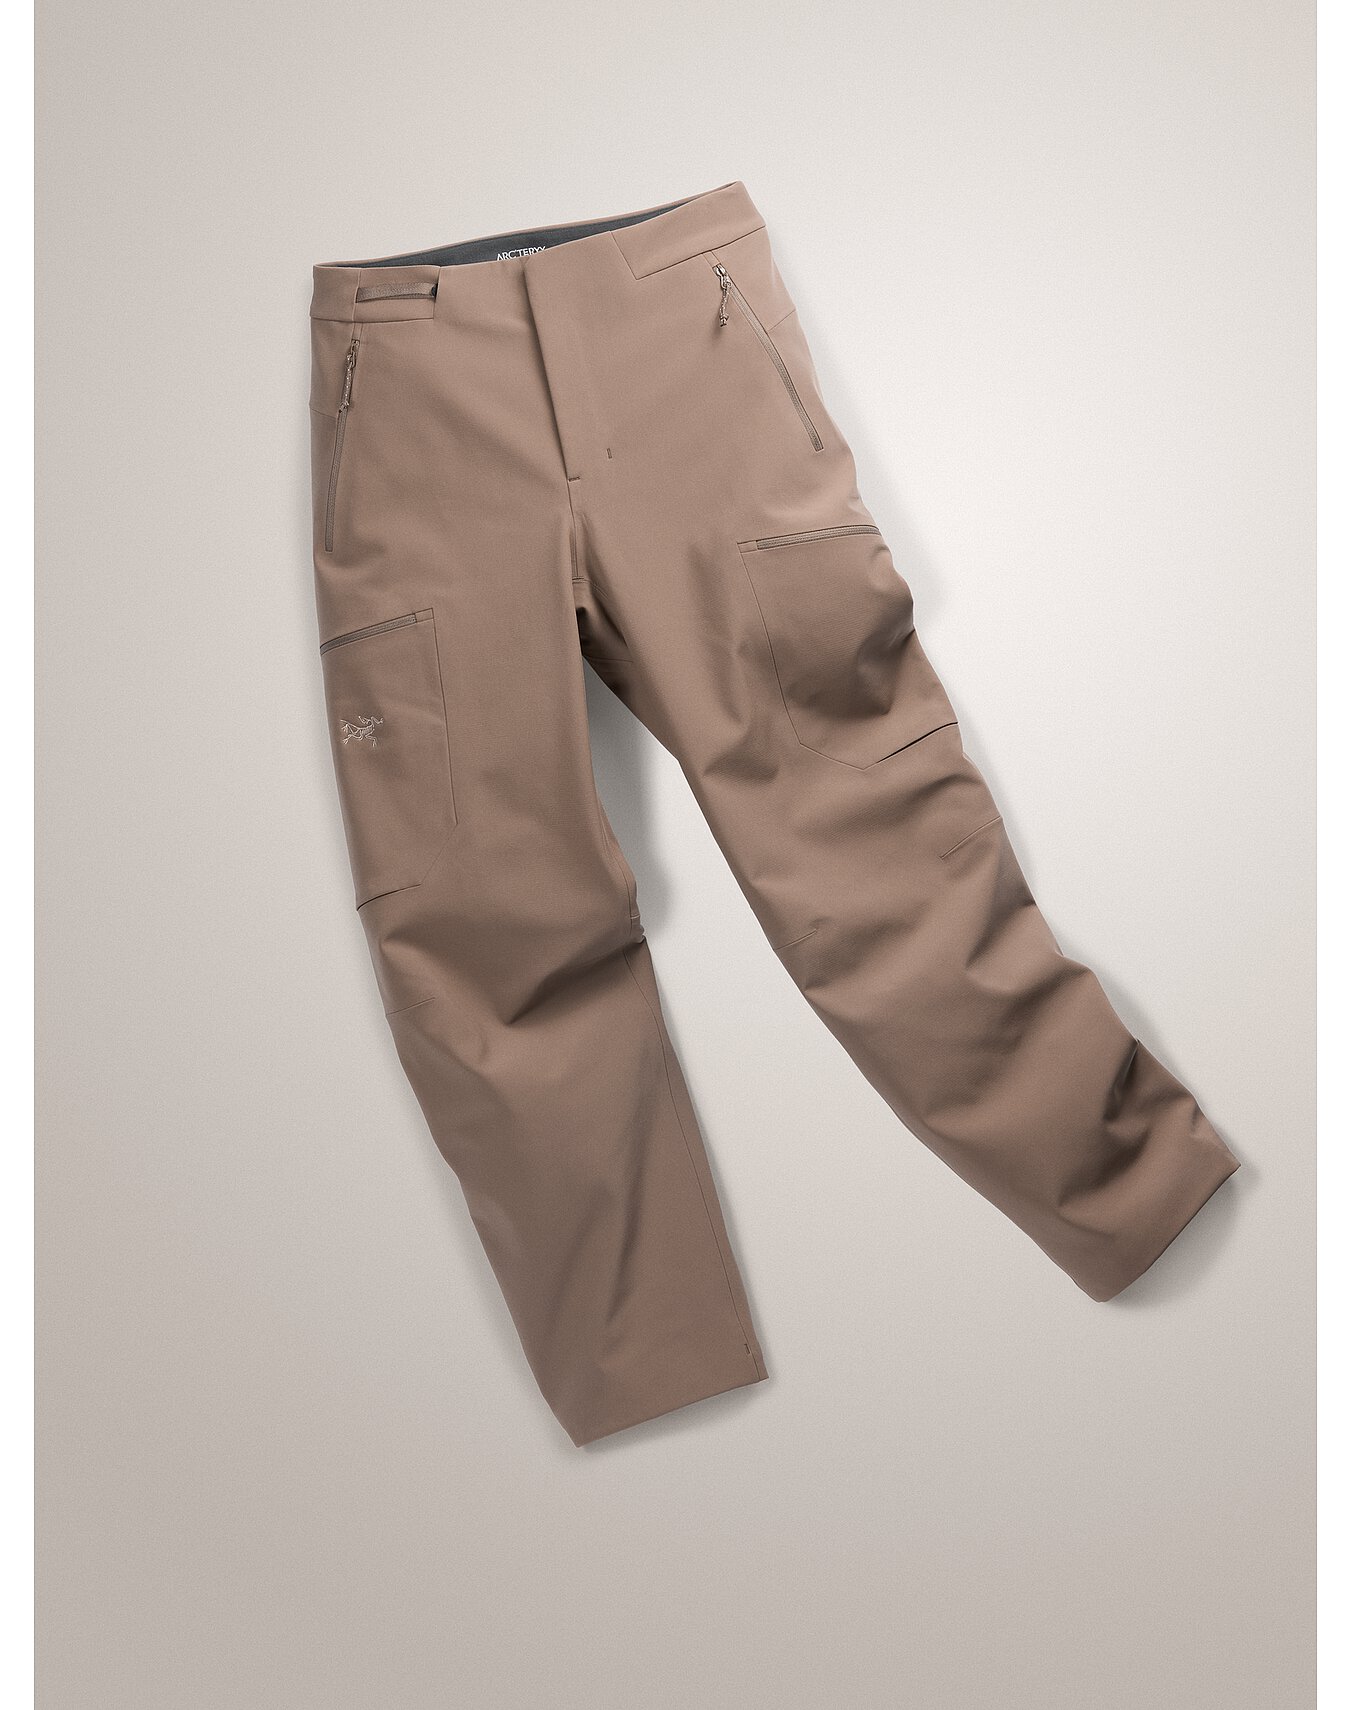 Men's Sidecut GORE-TEX® Pants